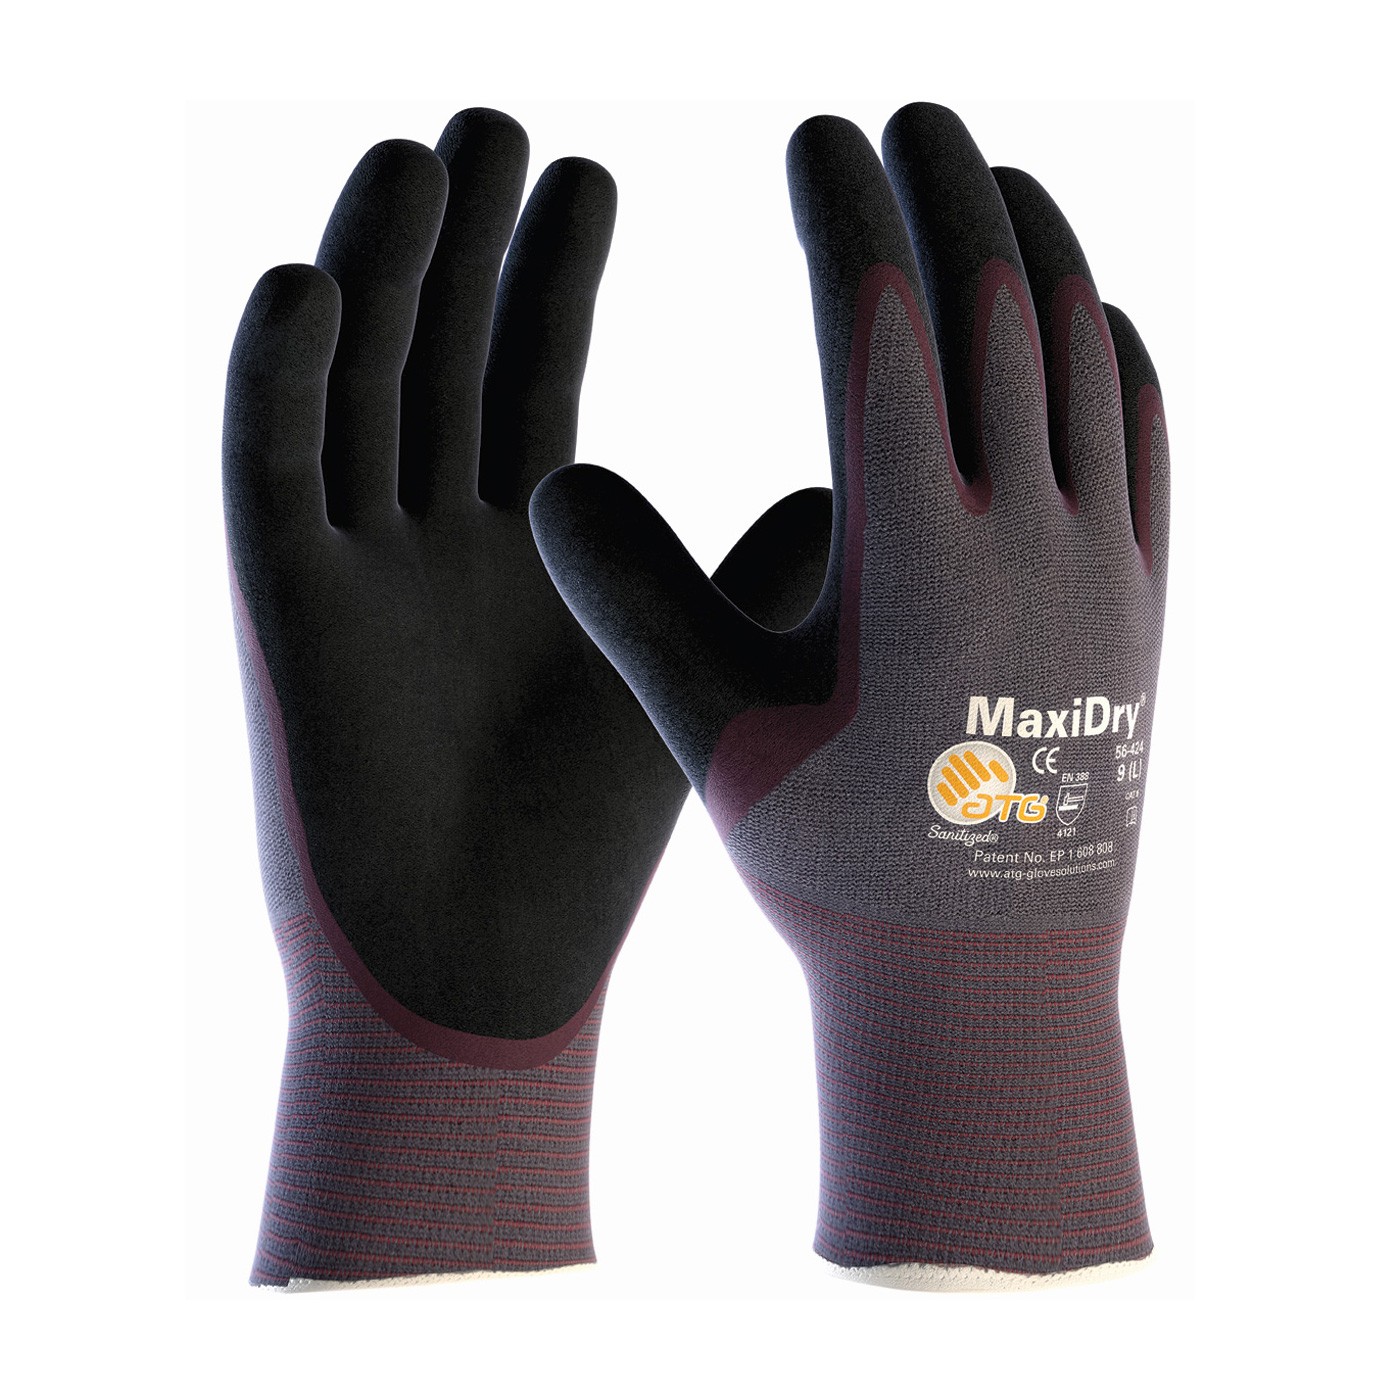 Glove "Maxidry" Coated Palm & Finger Small 6DZPR/CS